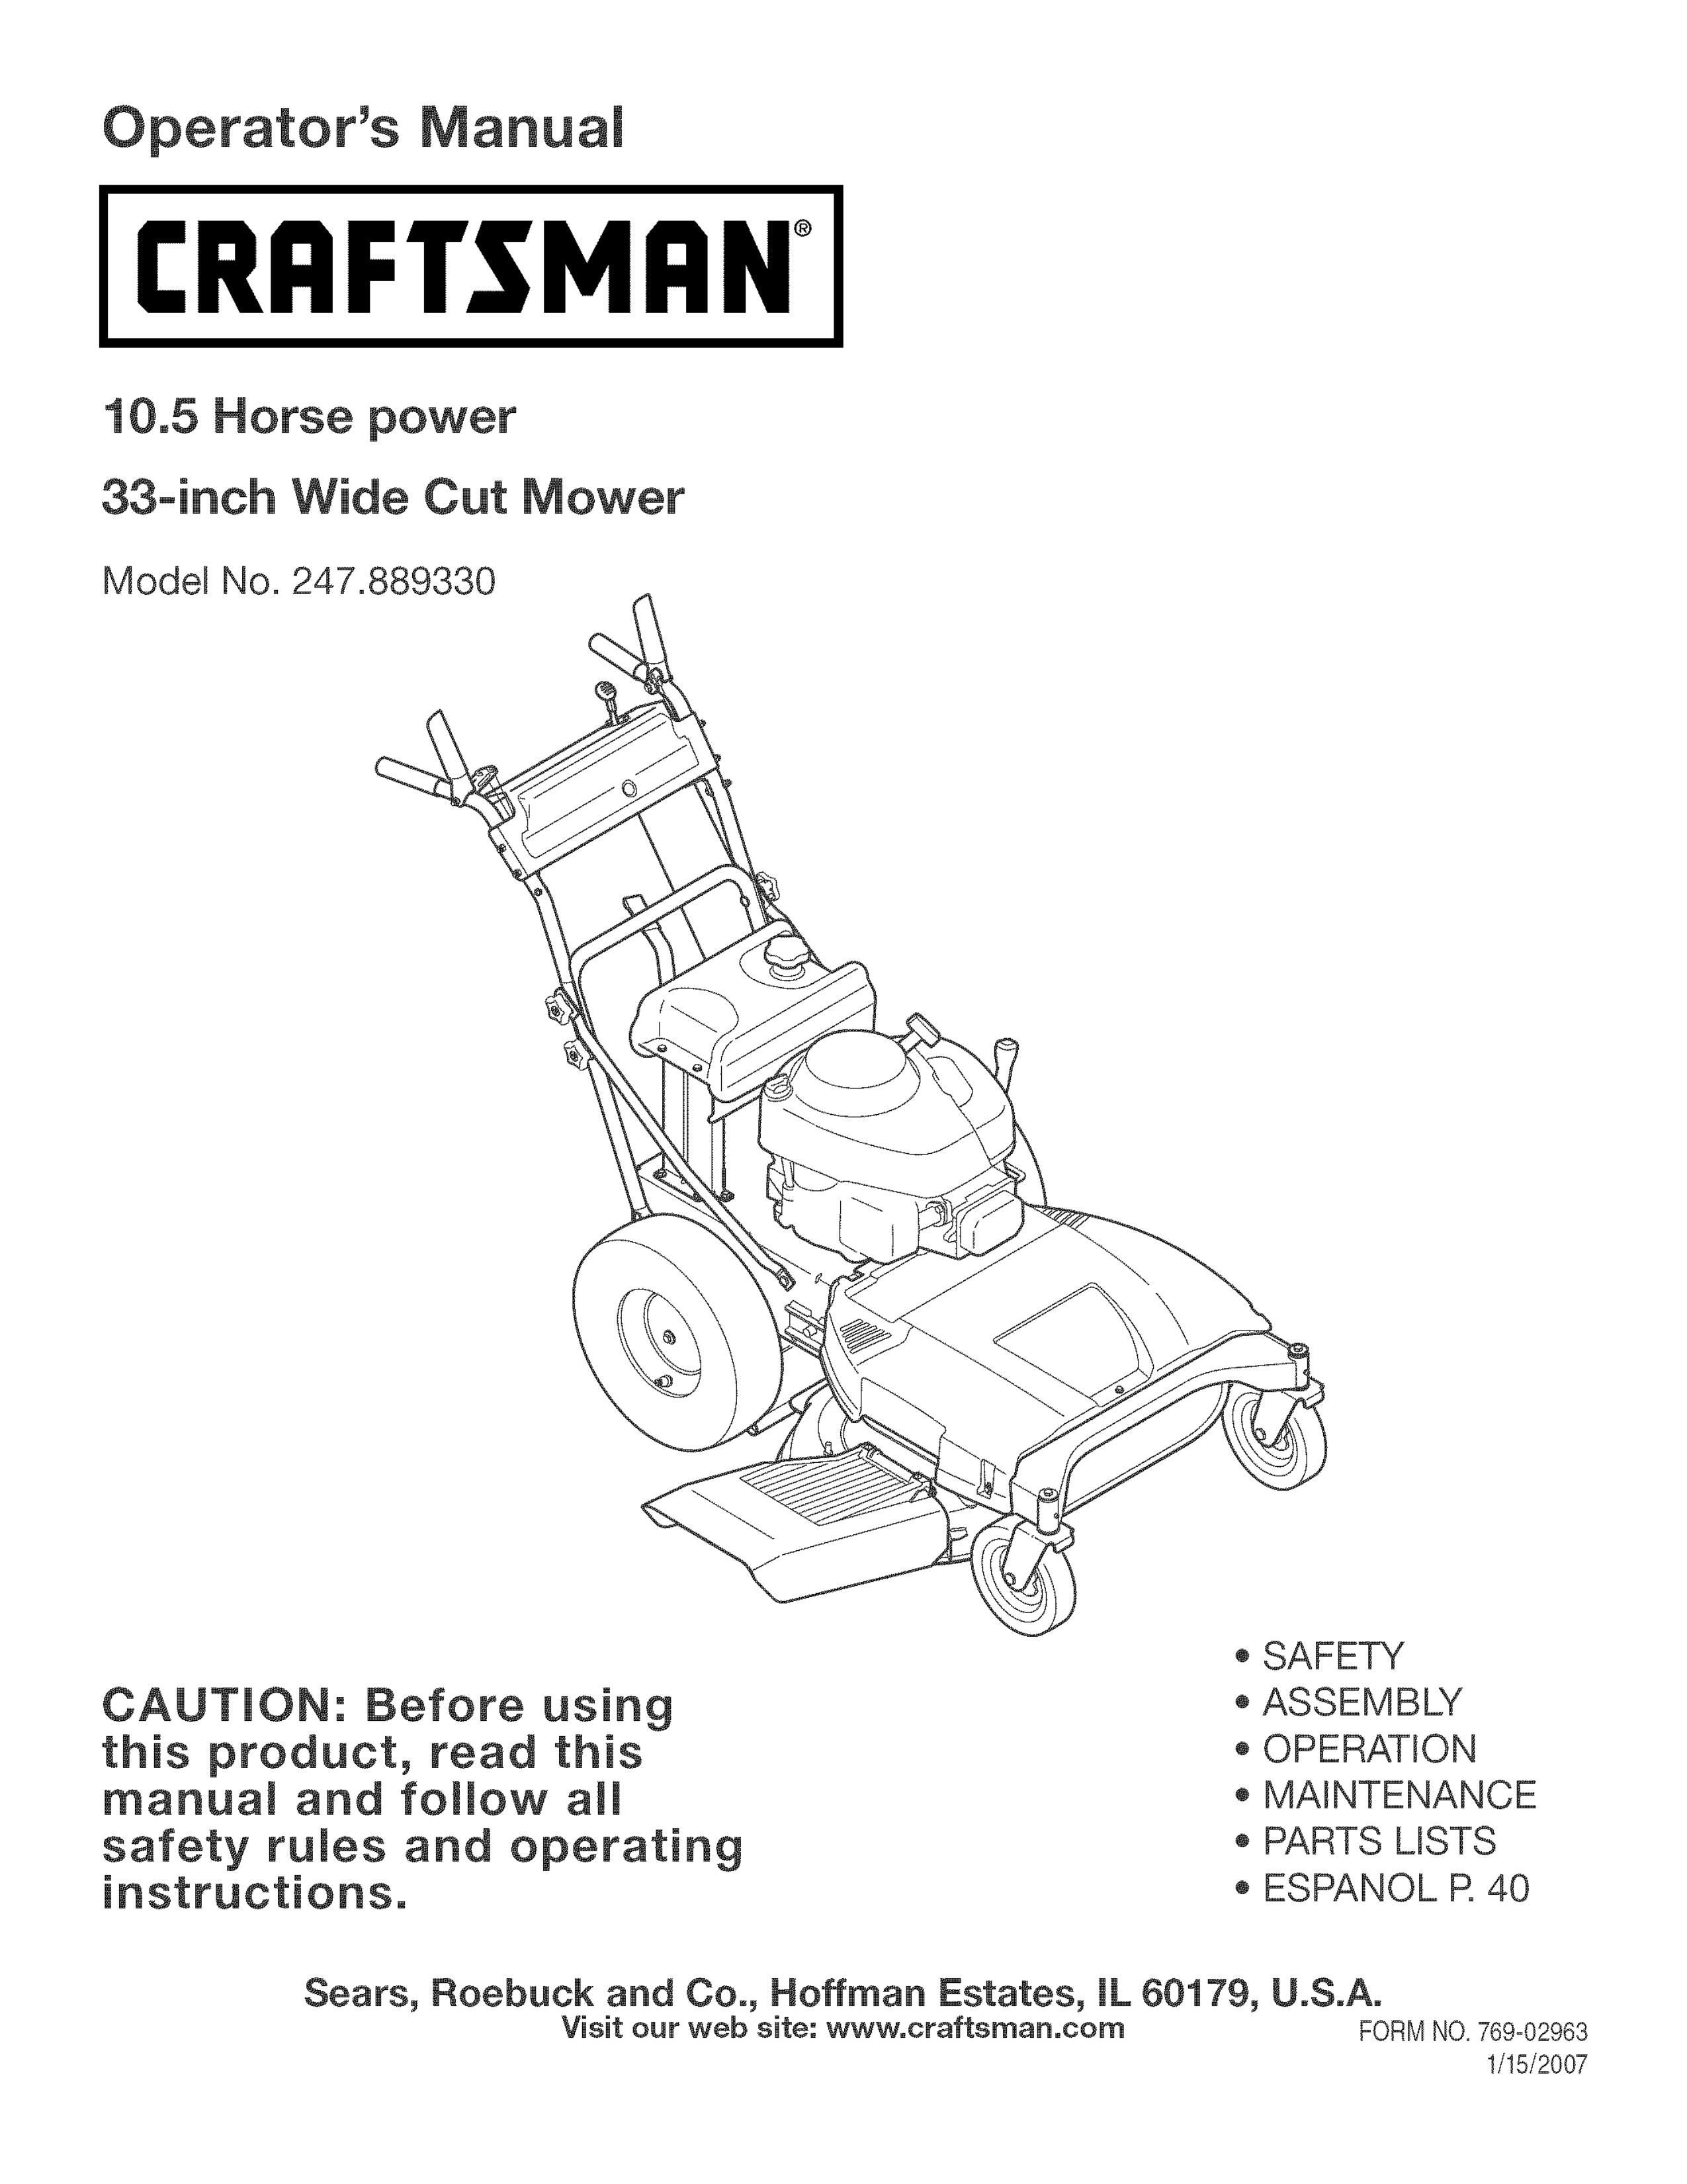 Craftsman 247.88933 Lawn Mower User Manual